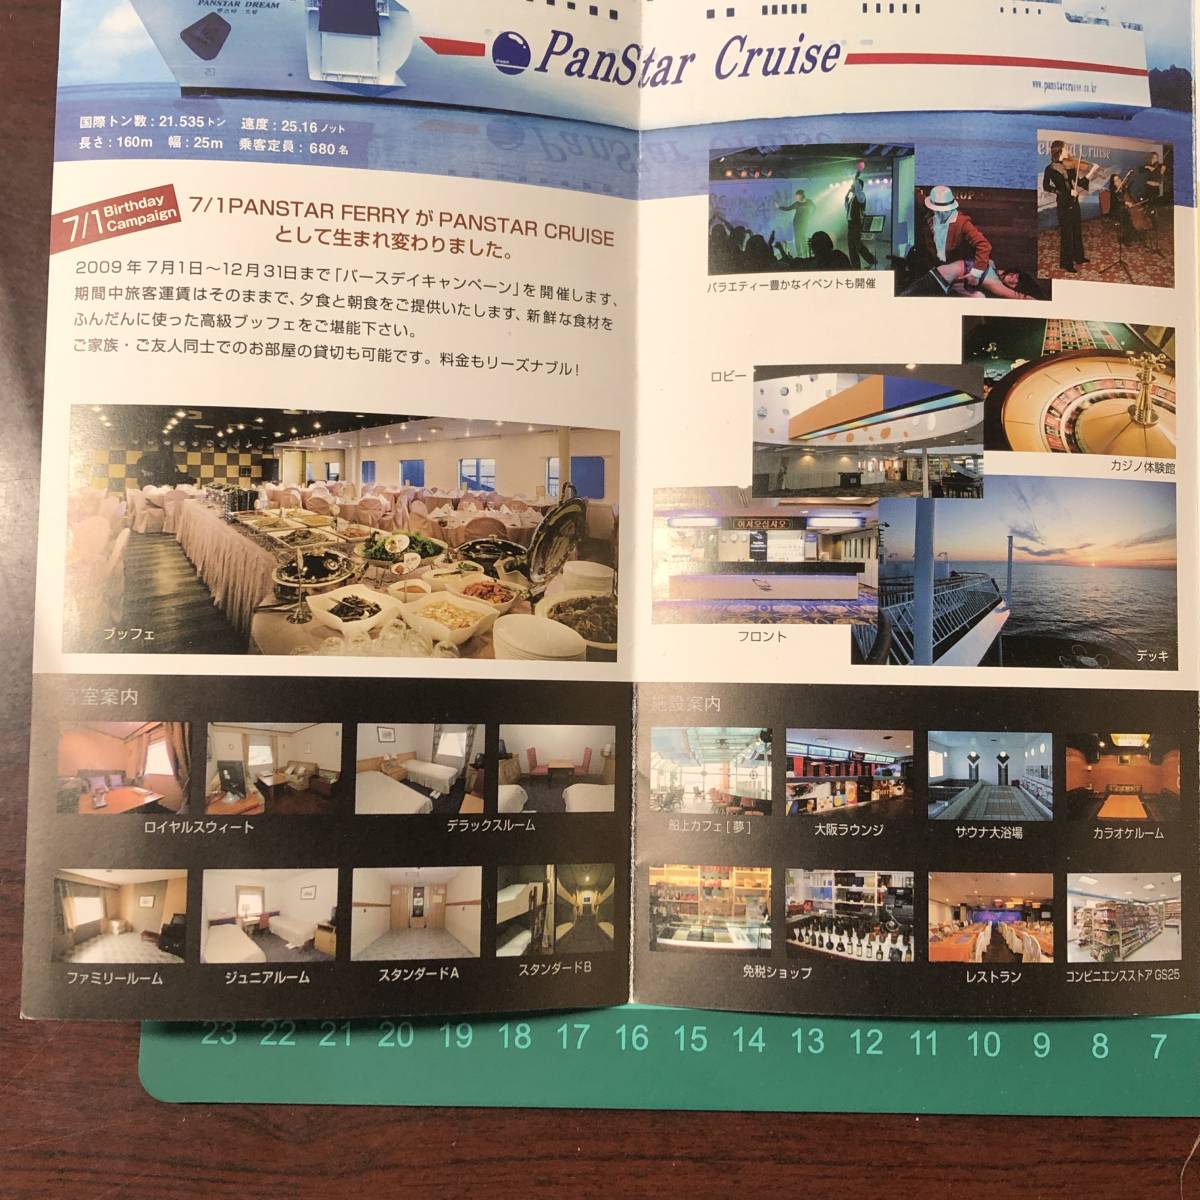 PanStar Cruise хлеб Star круиз Osaka = котел гора PANSTER DREAM плата таблица имеется каталог проспект [F0412]